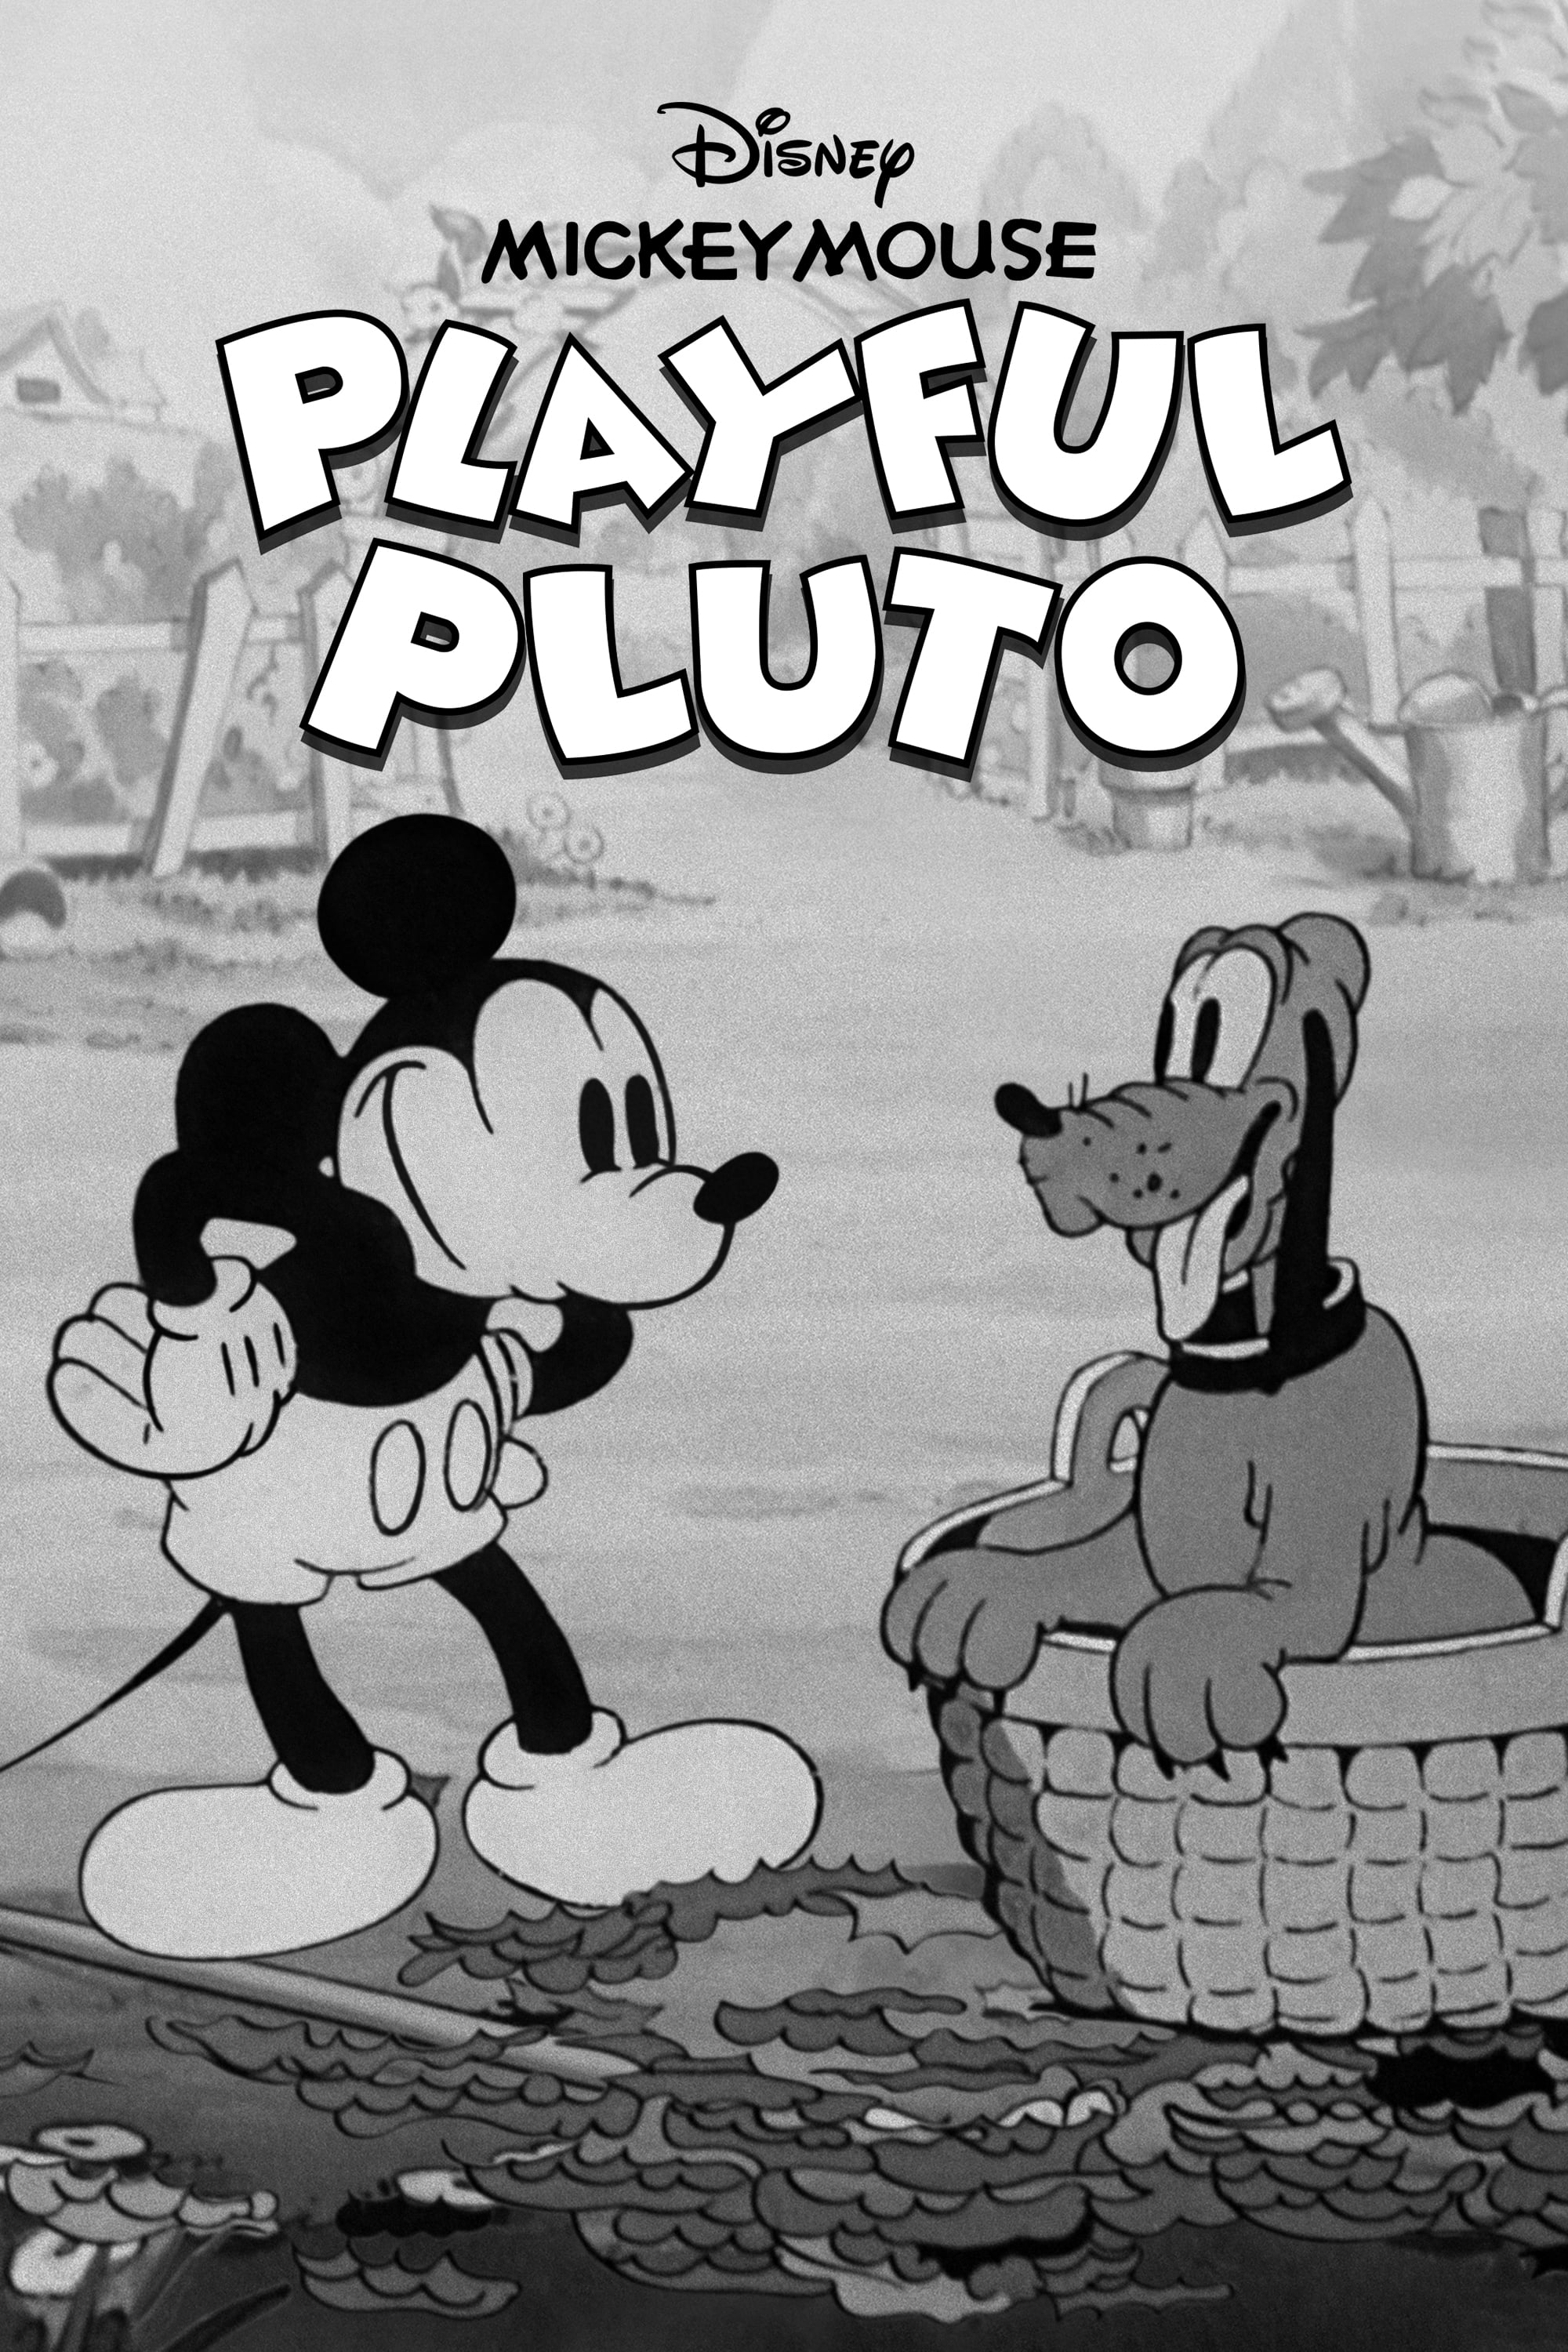 Playful Pluto (1934)